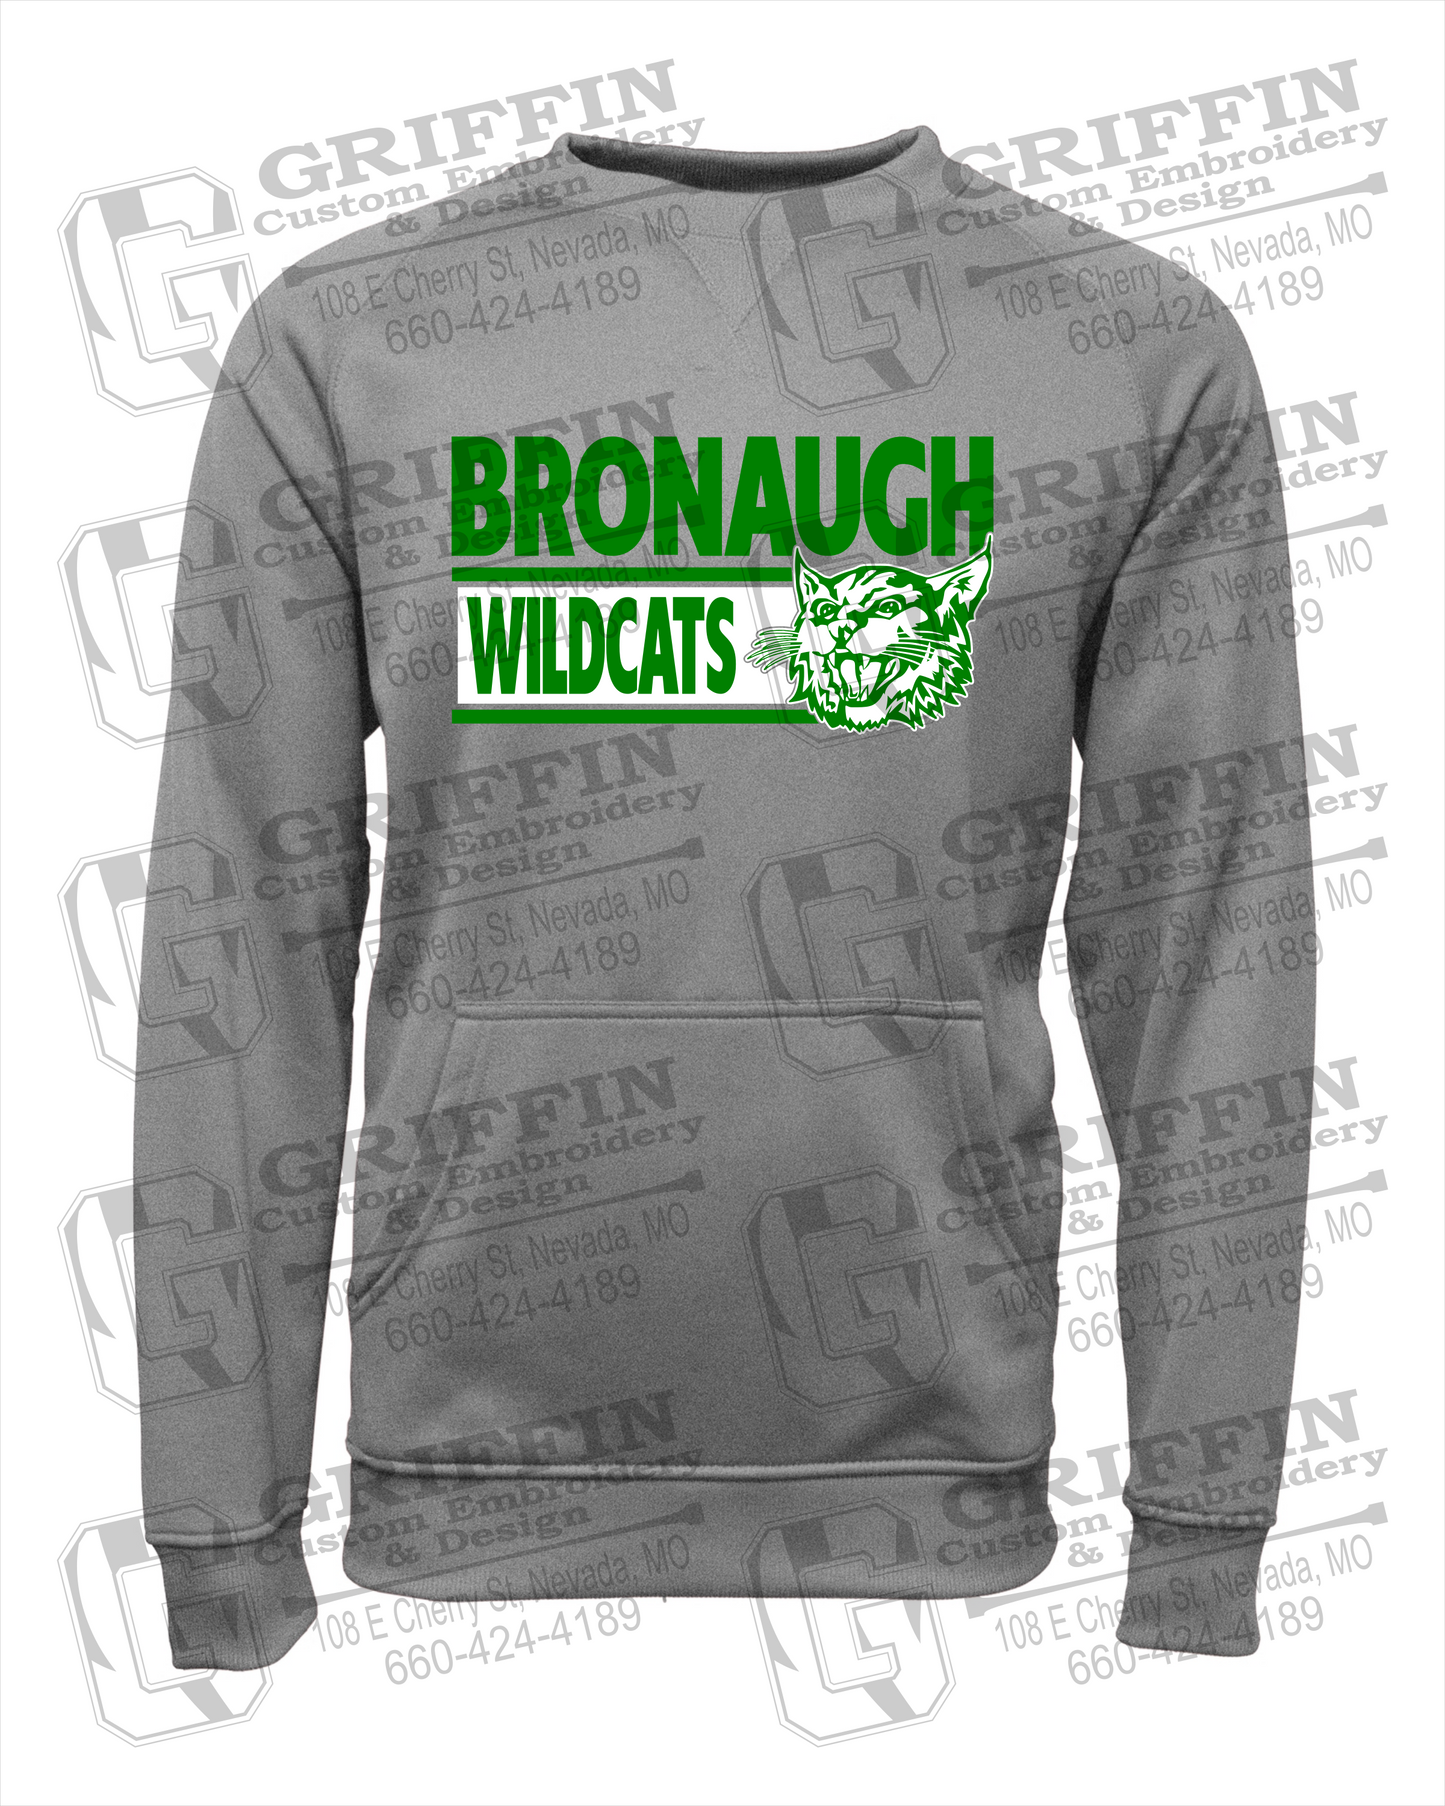 Bronaugh Wildcats 24-B Sweatshirt